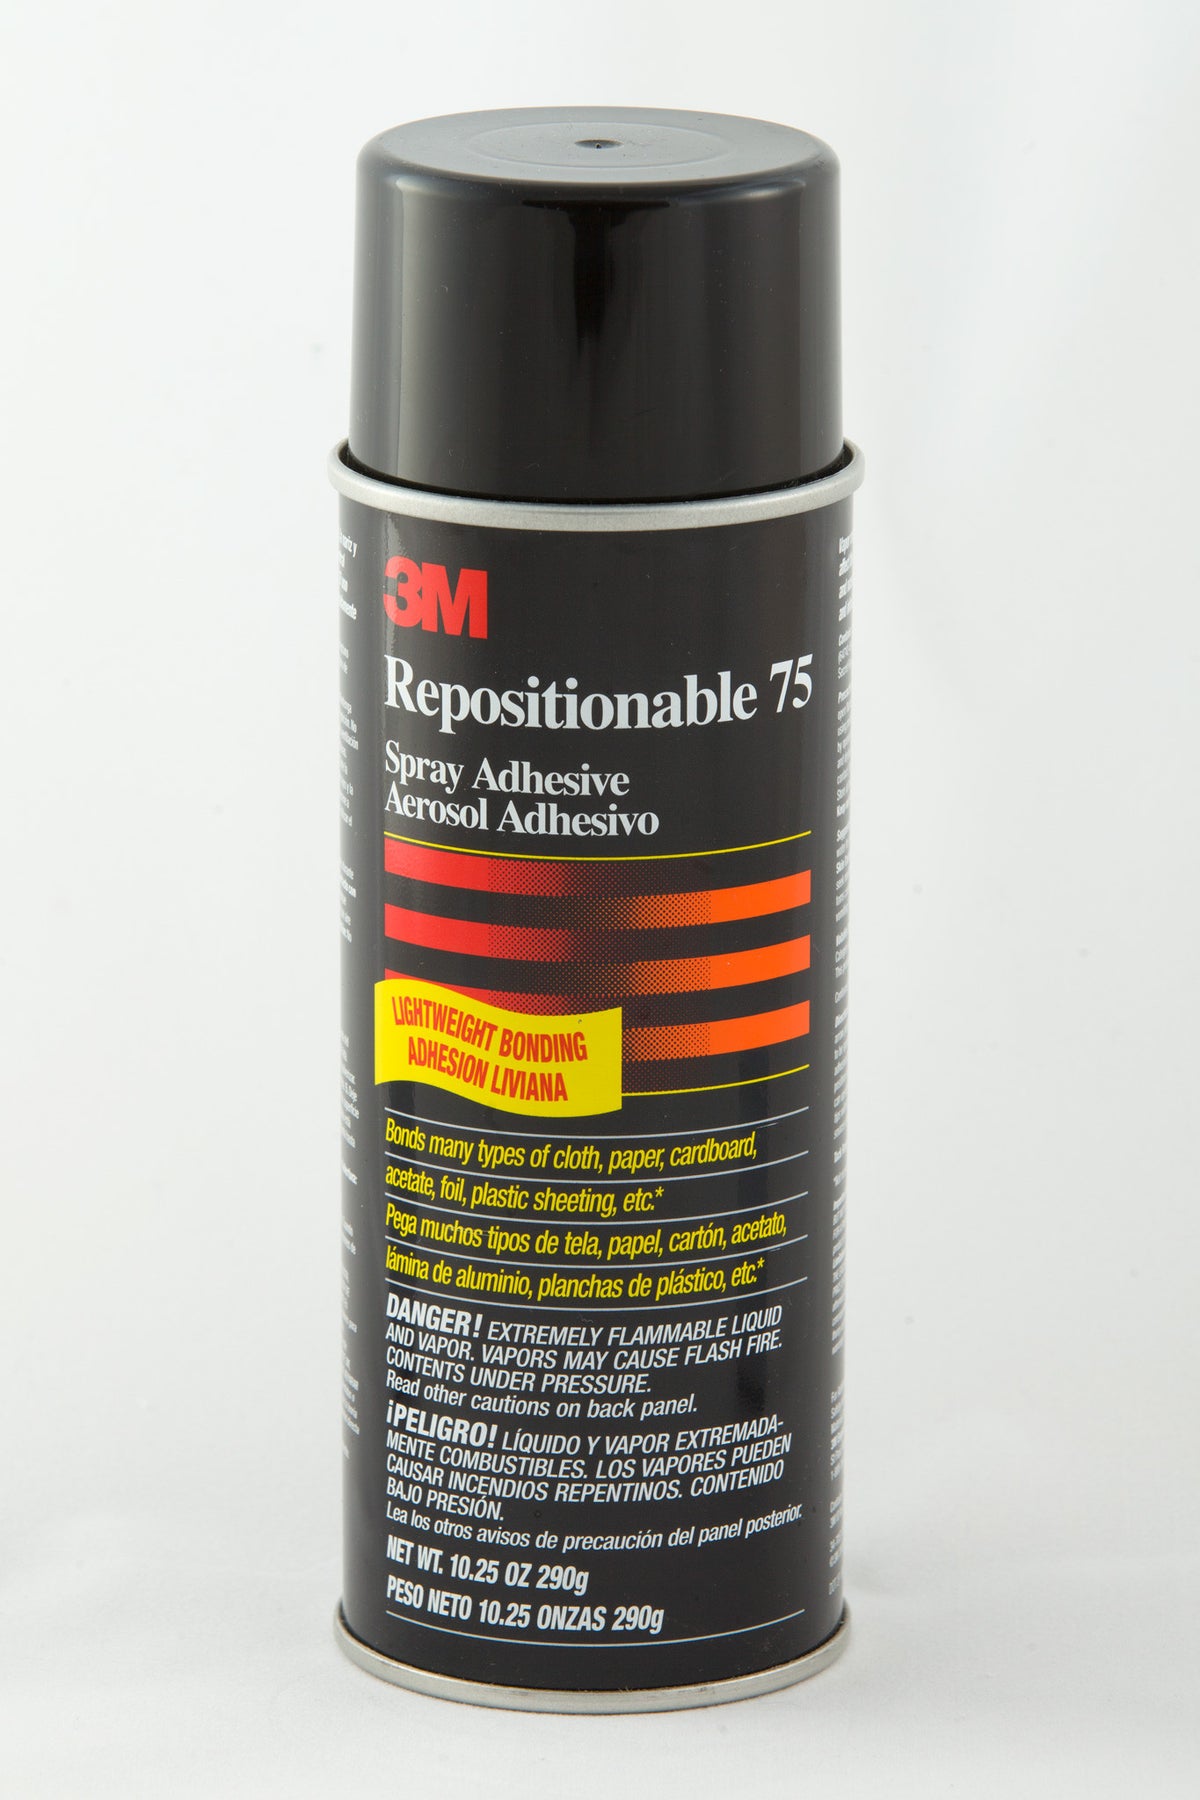 3M 30067 75 Repositionable Spray Adhesive 16 oz.